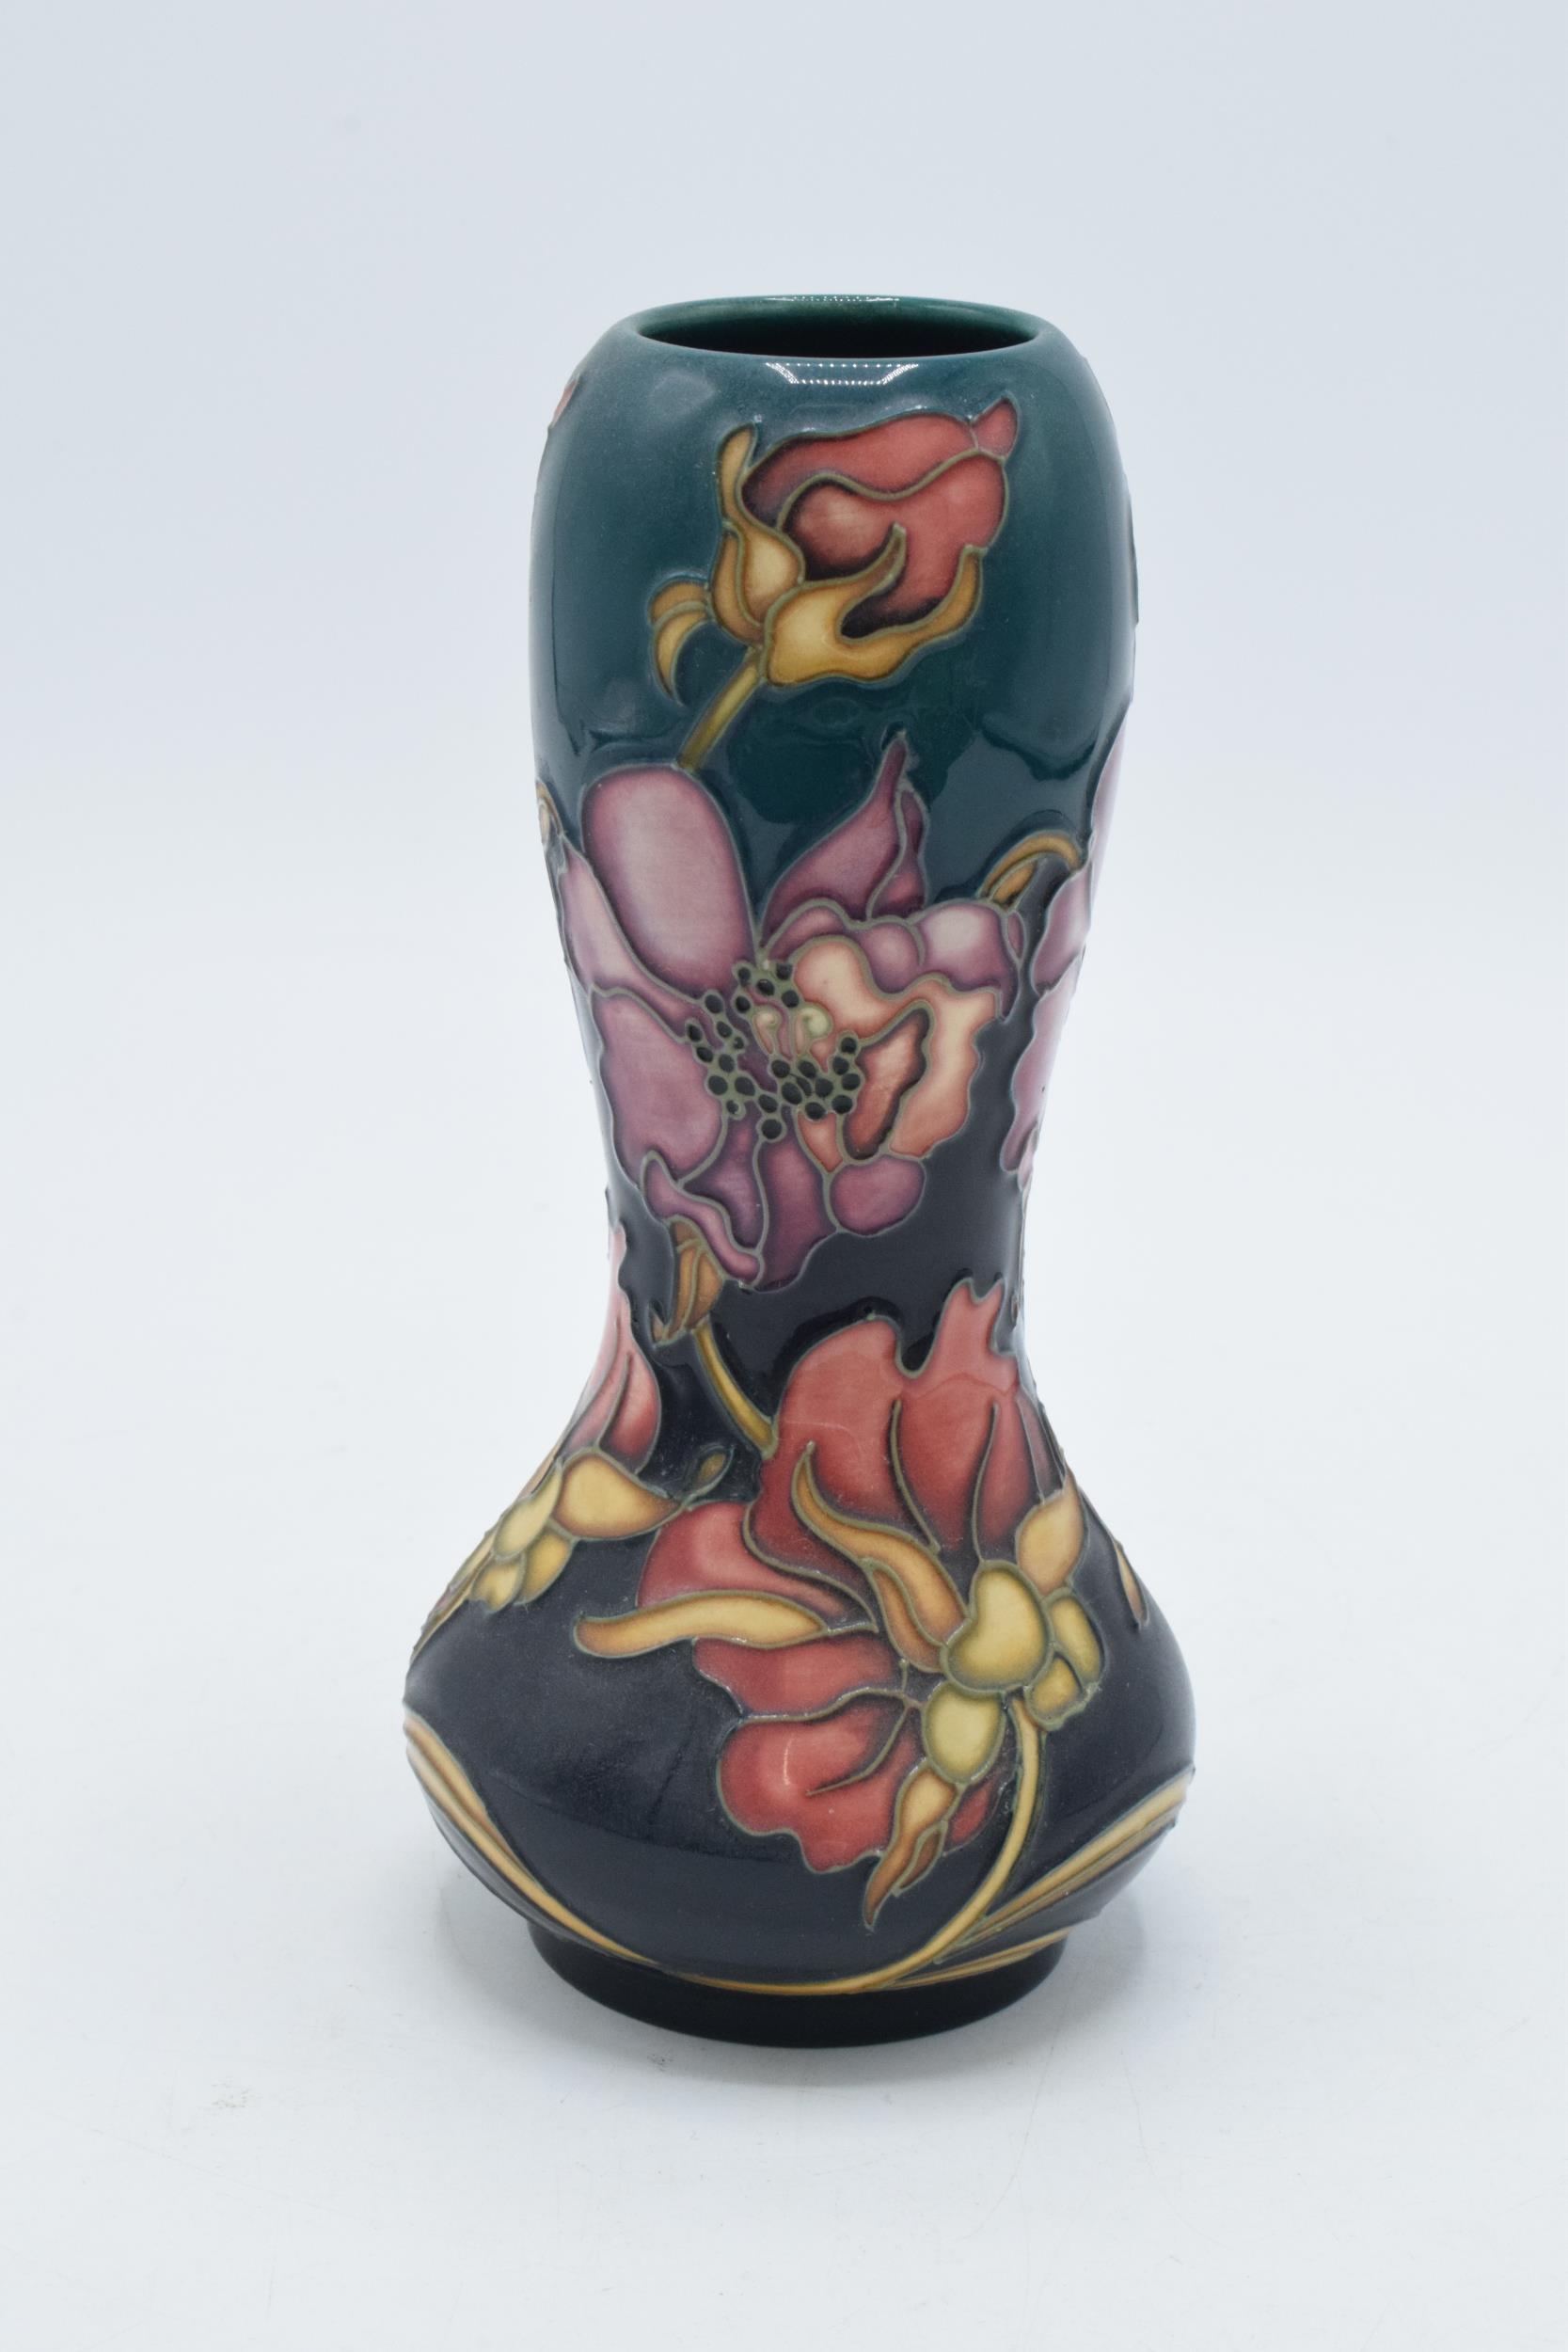 Moorcroft low shouldered gourd vase with floral patterns on blue background, 16cm tall, red dot